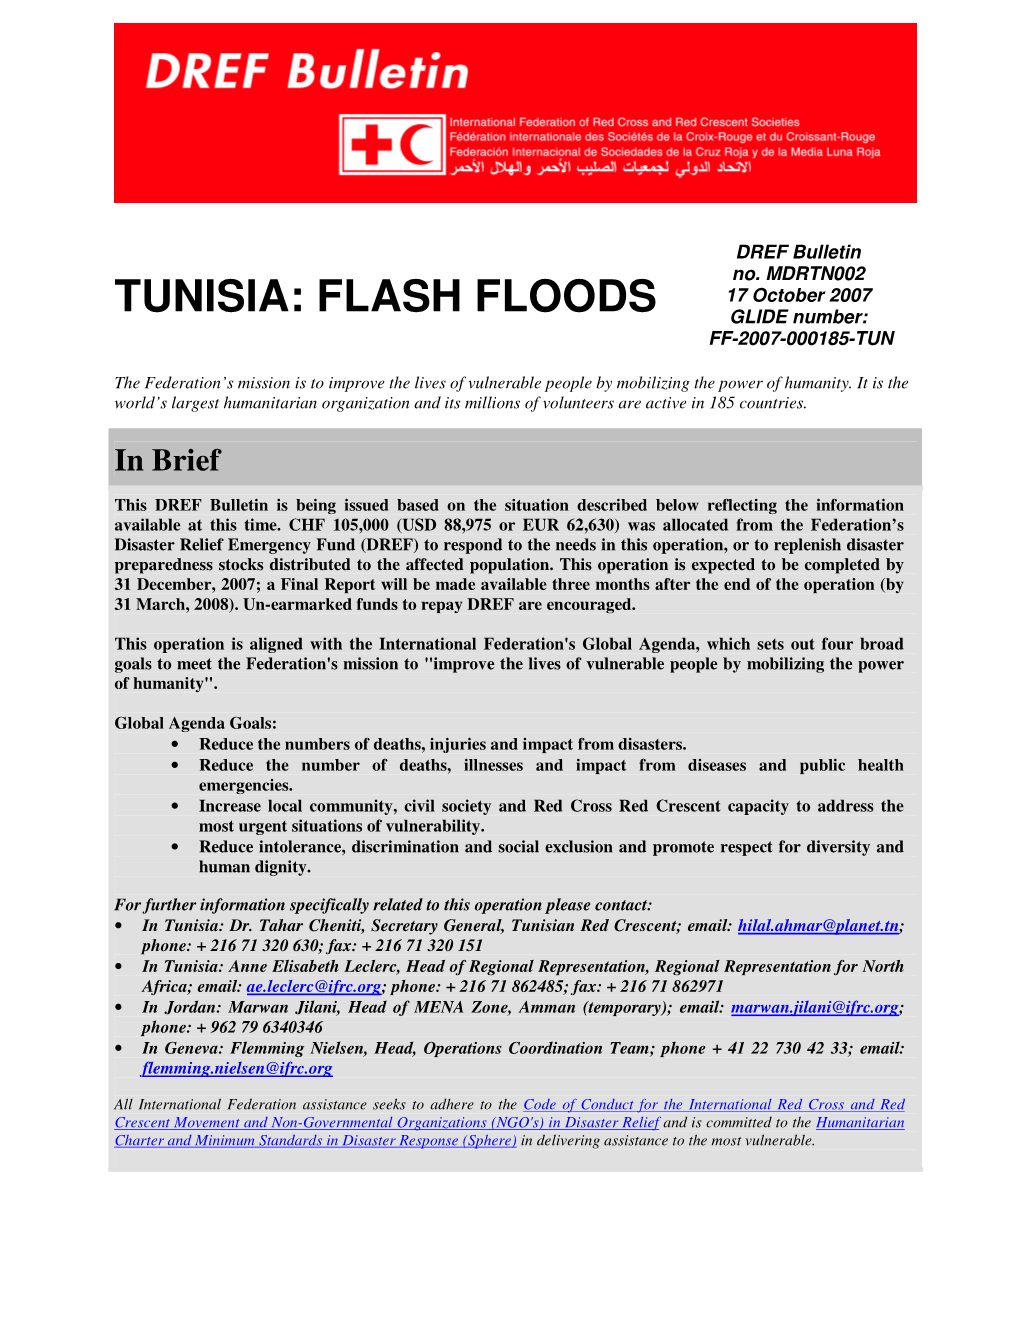 FLASH FLOODS 17 October 2007 GLIDE Number: FF-2007-000185-TUN